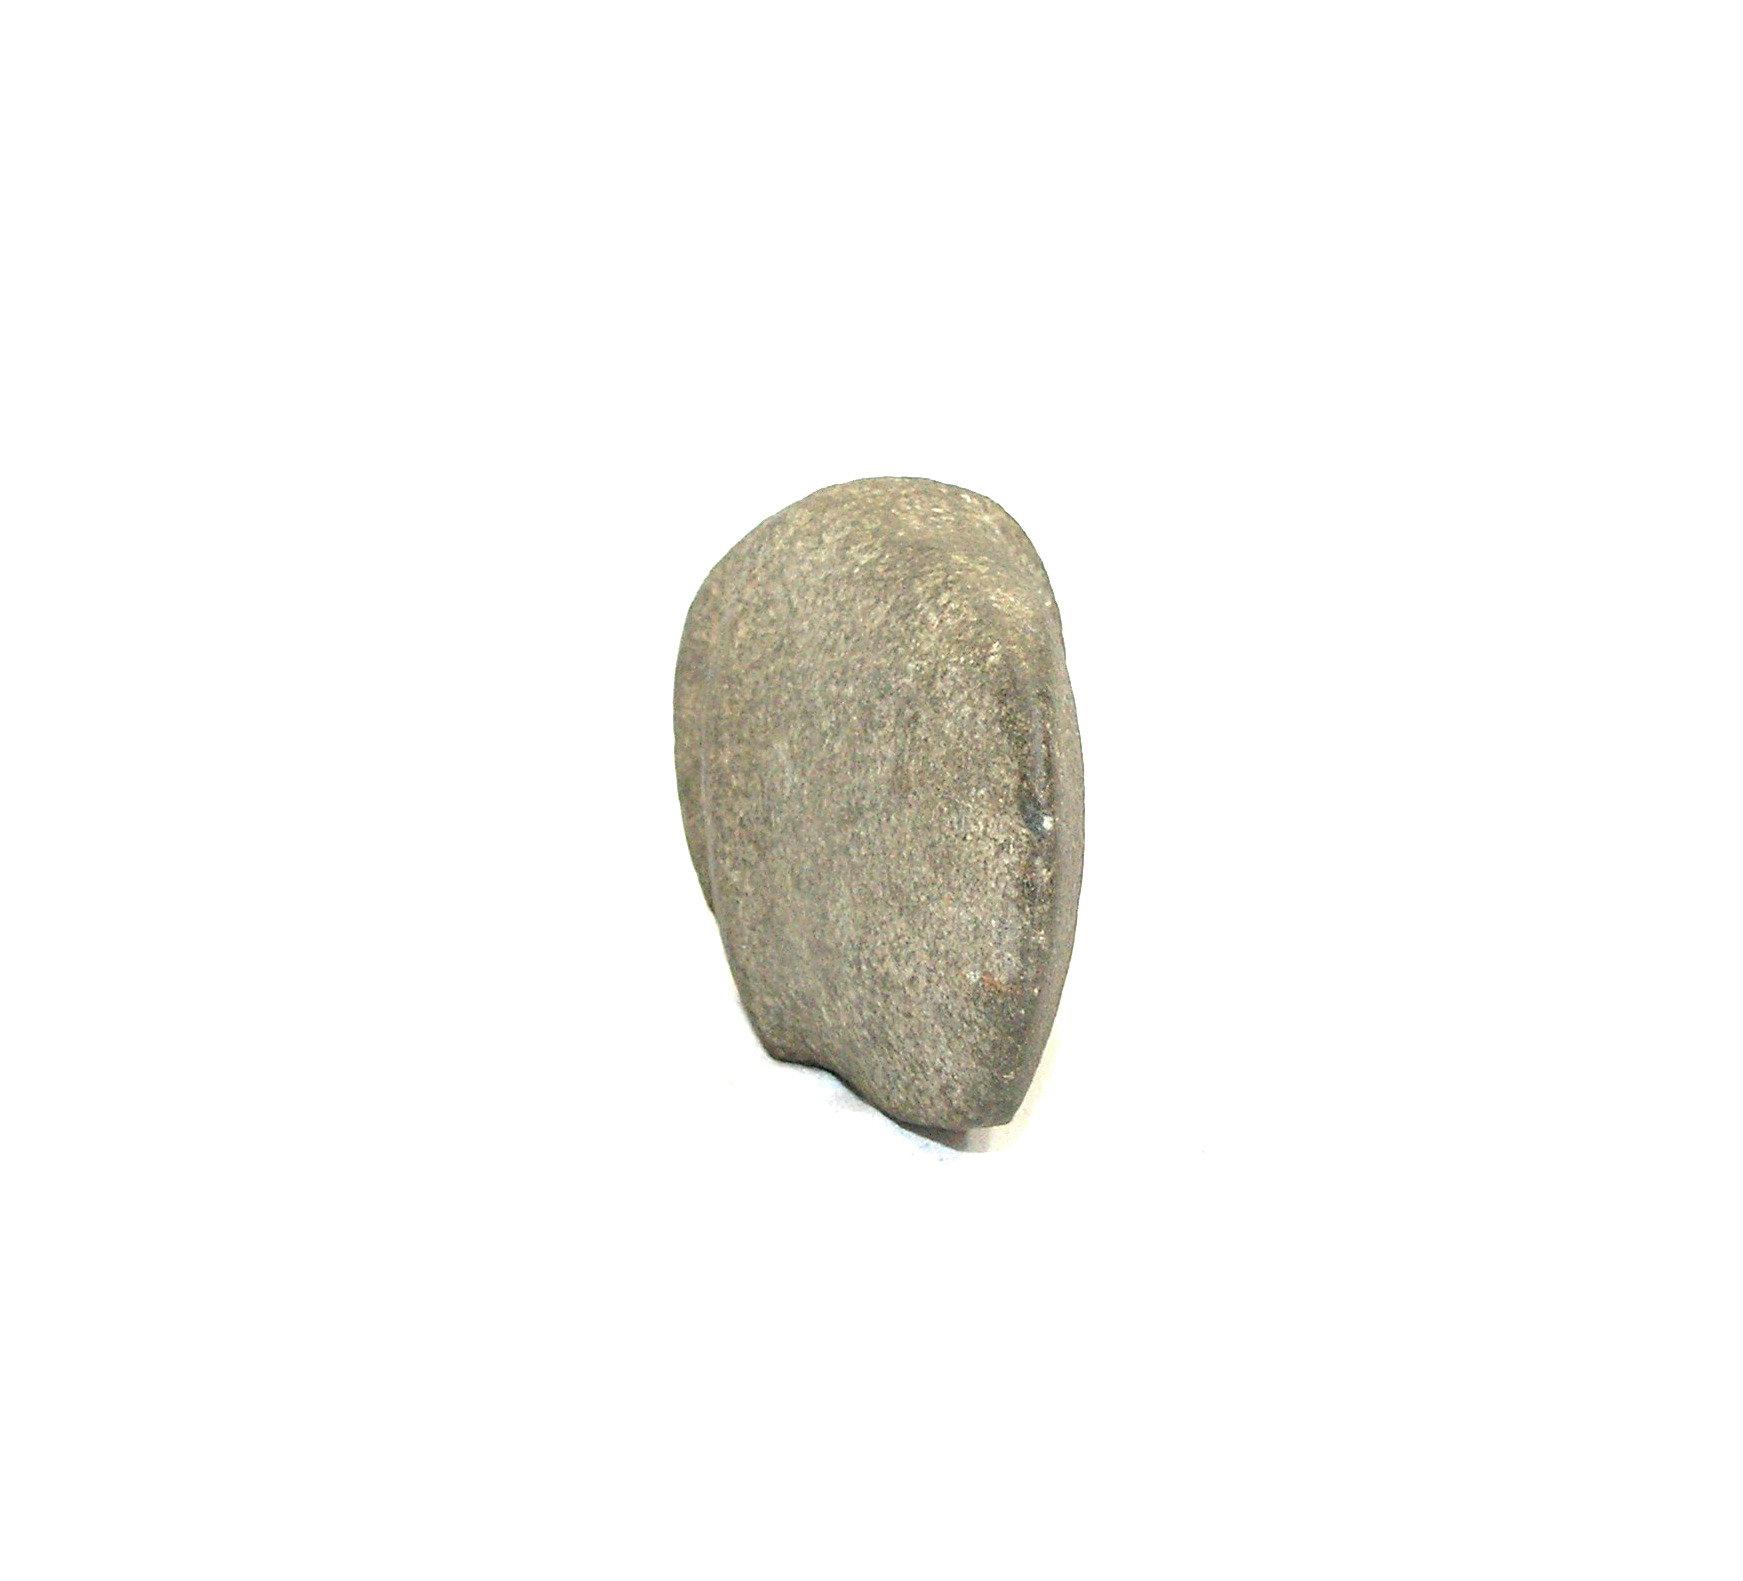 Vintage American Indian Artifact Stone Axe Head.   6-1/2" x 3-1/2"